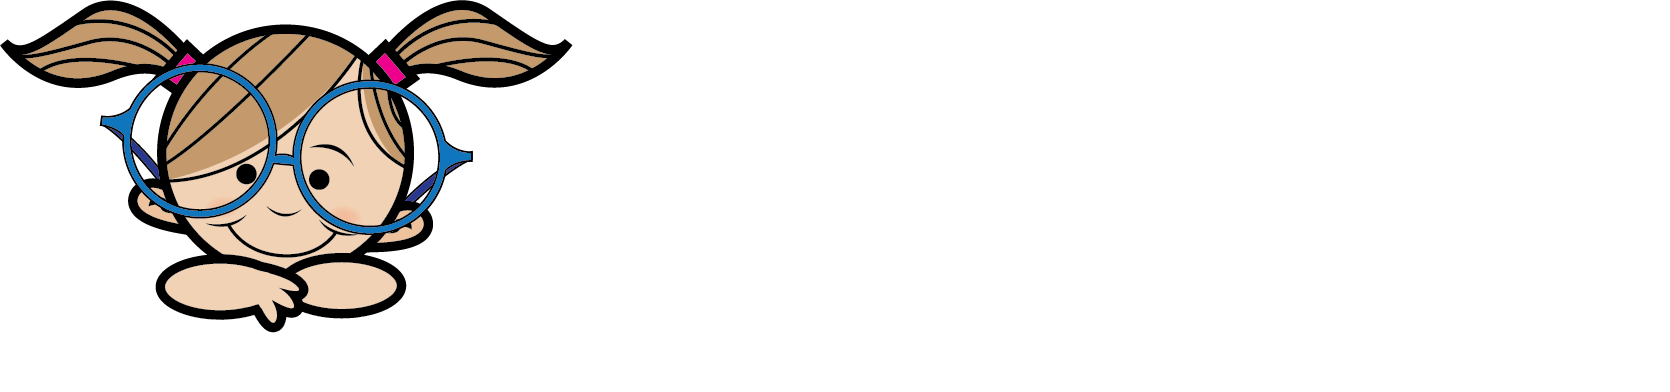 Arlington Loudoun Pediatric Ophthalmology